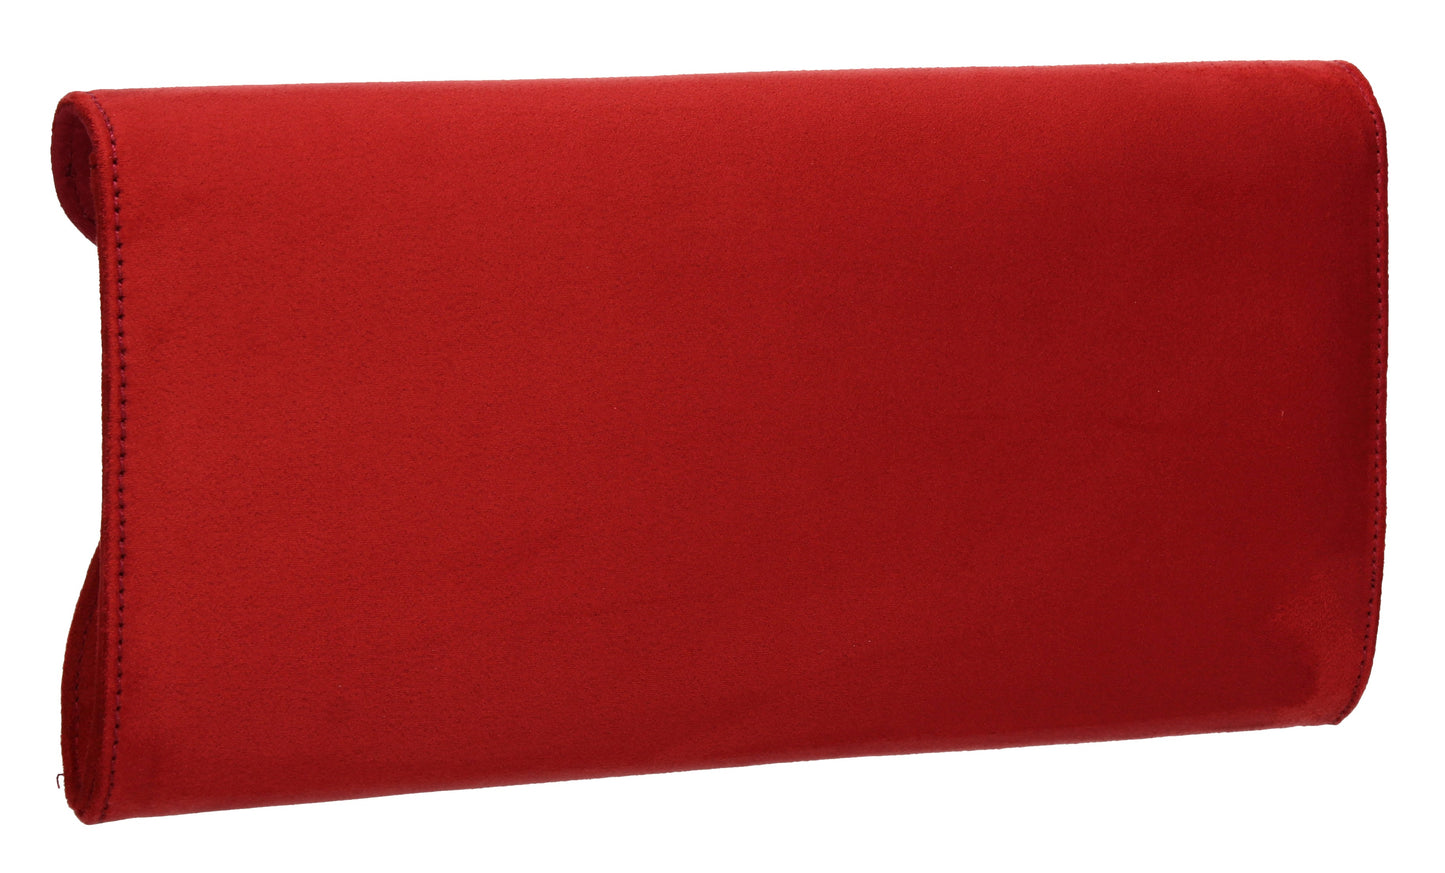 SWANKYSWANS Karlie Suede Clutch Bag Red Cute Cheap Clutch Bag For Weddings School and Work